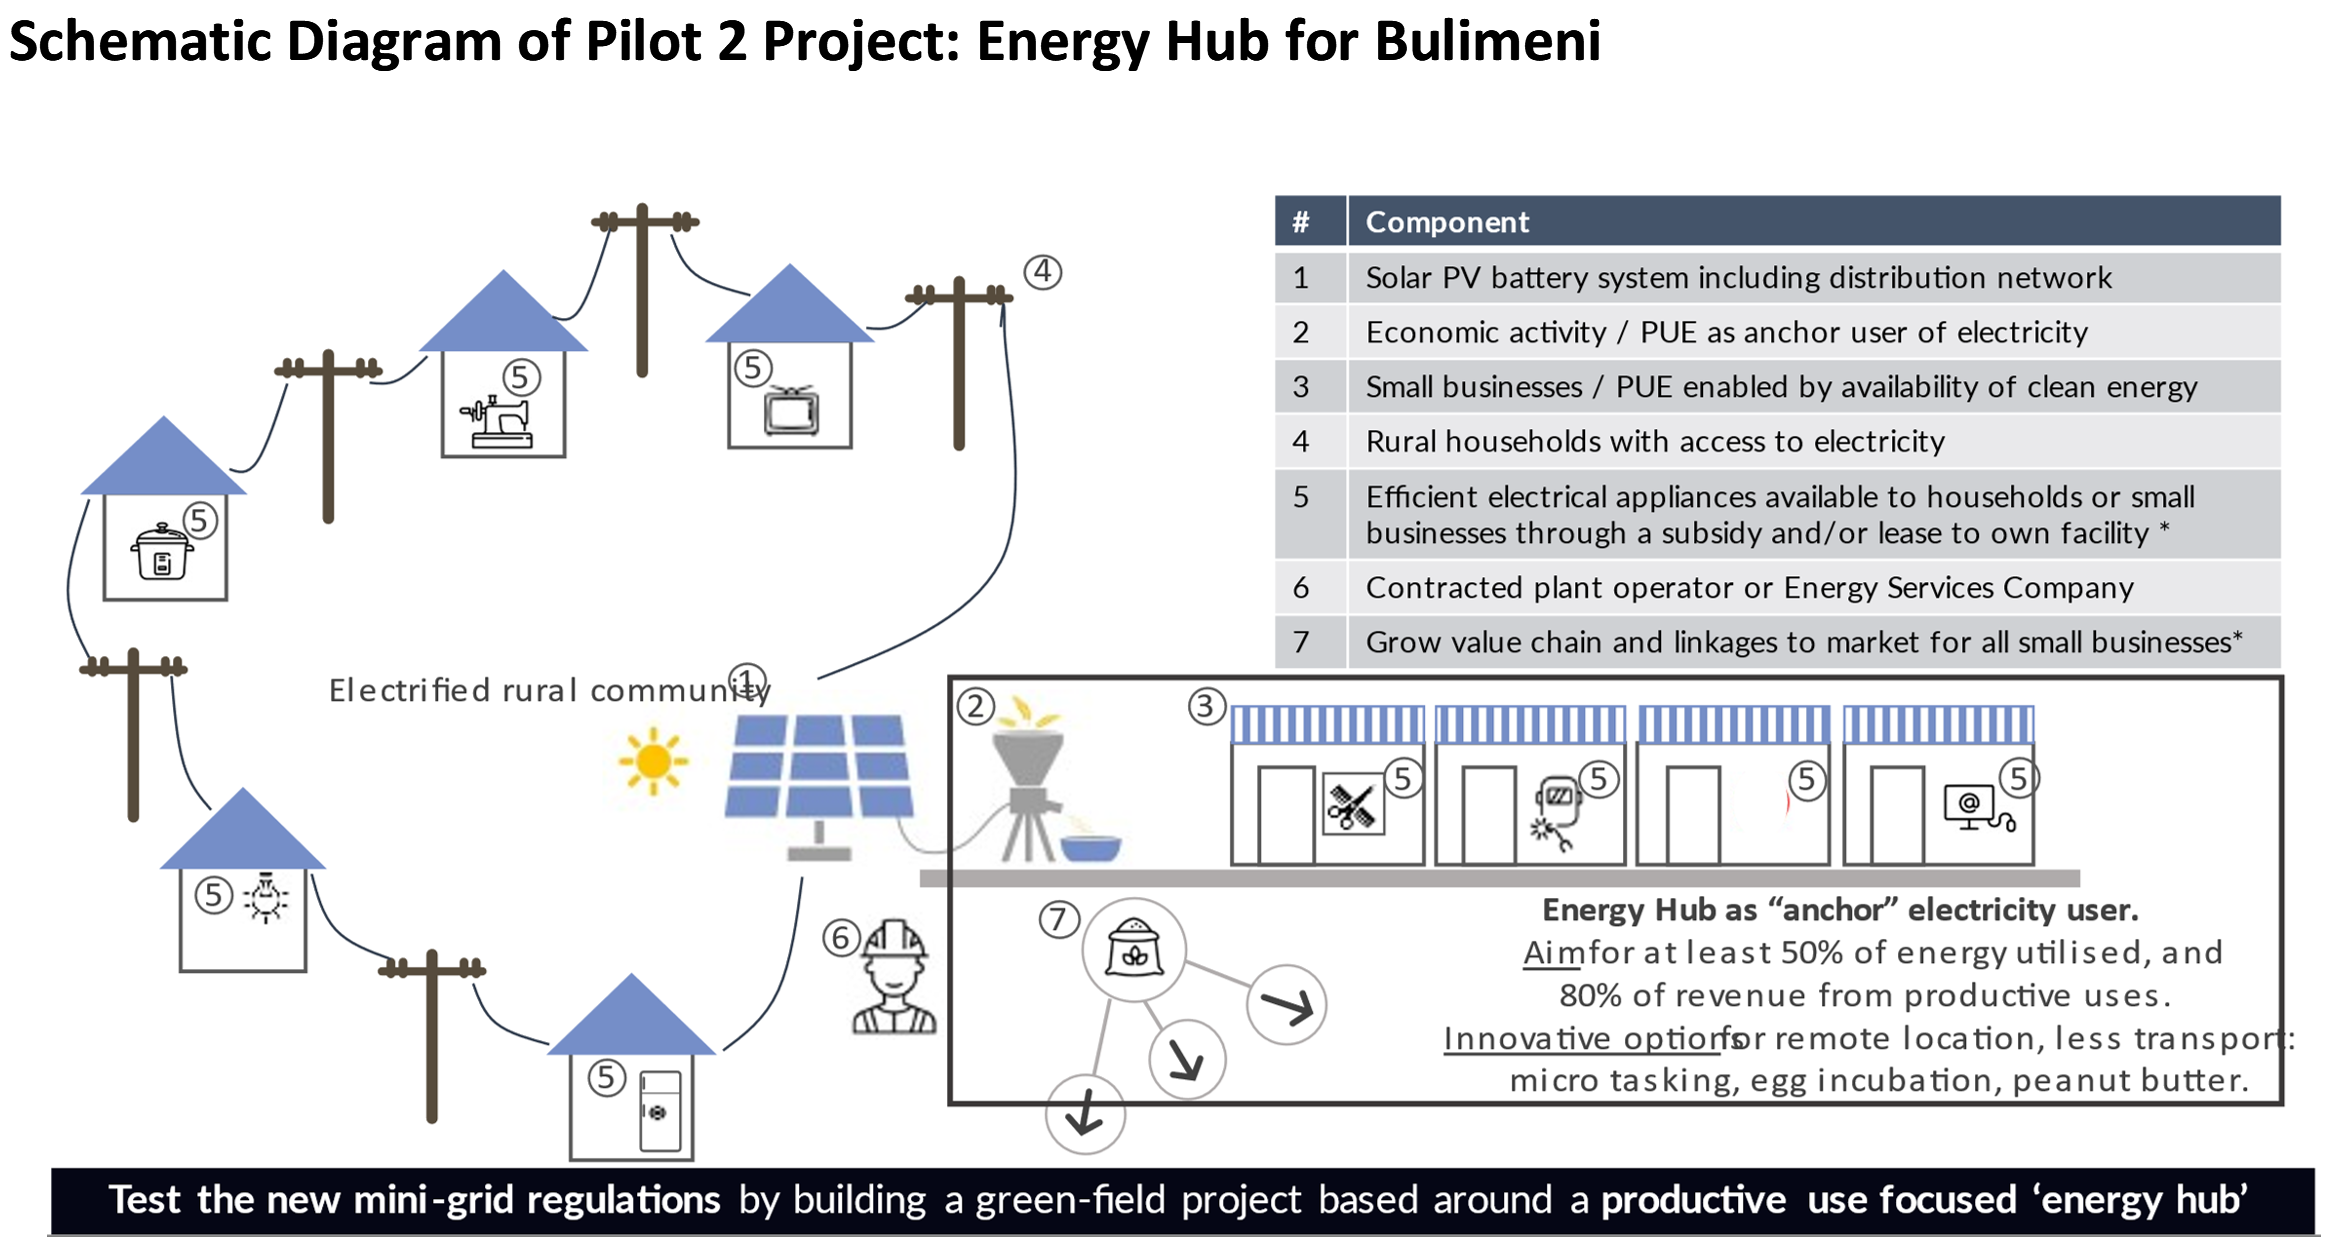 Bulimeni - Schematics Diagrams of Pilot Project